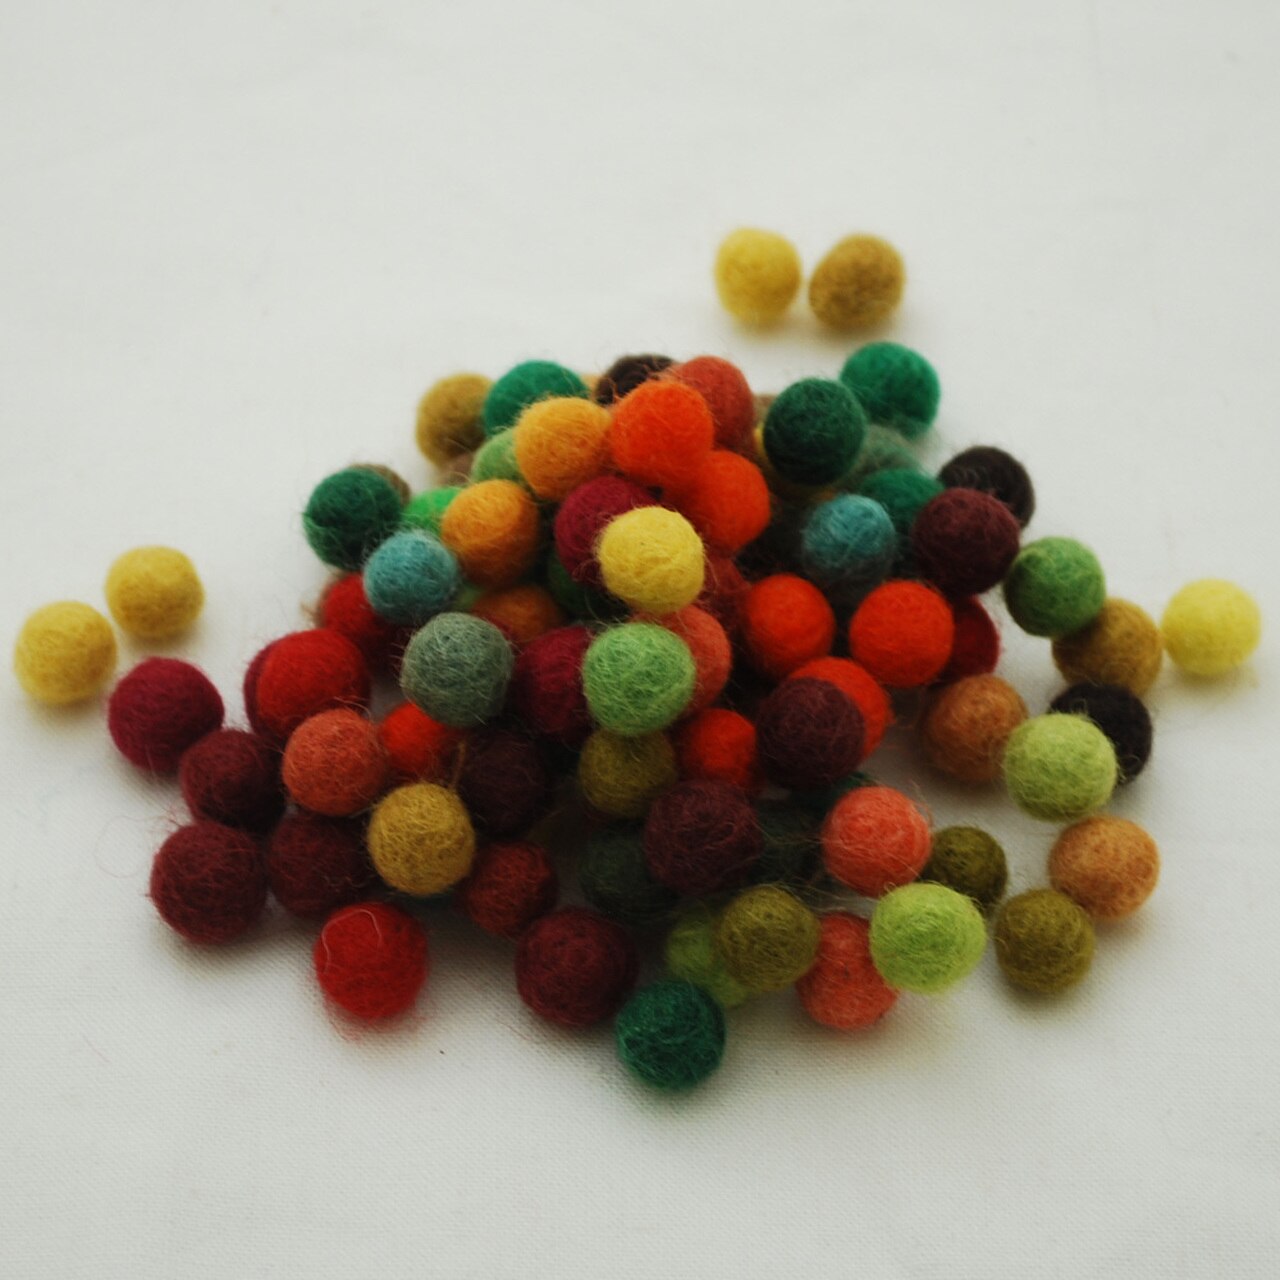 Pack of Pure Wool Felt Balls - Autumn Mix  Approx 100 balls per Pack - 1.5cm diameter.  Perfect for acorn garlands!